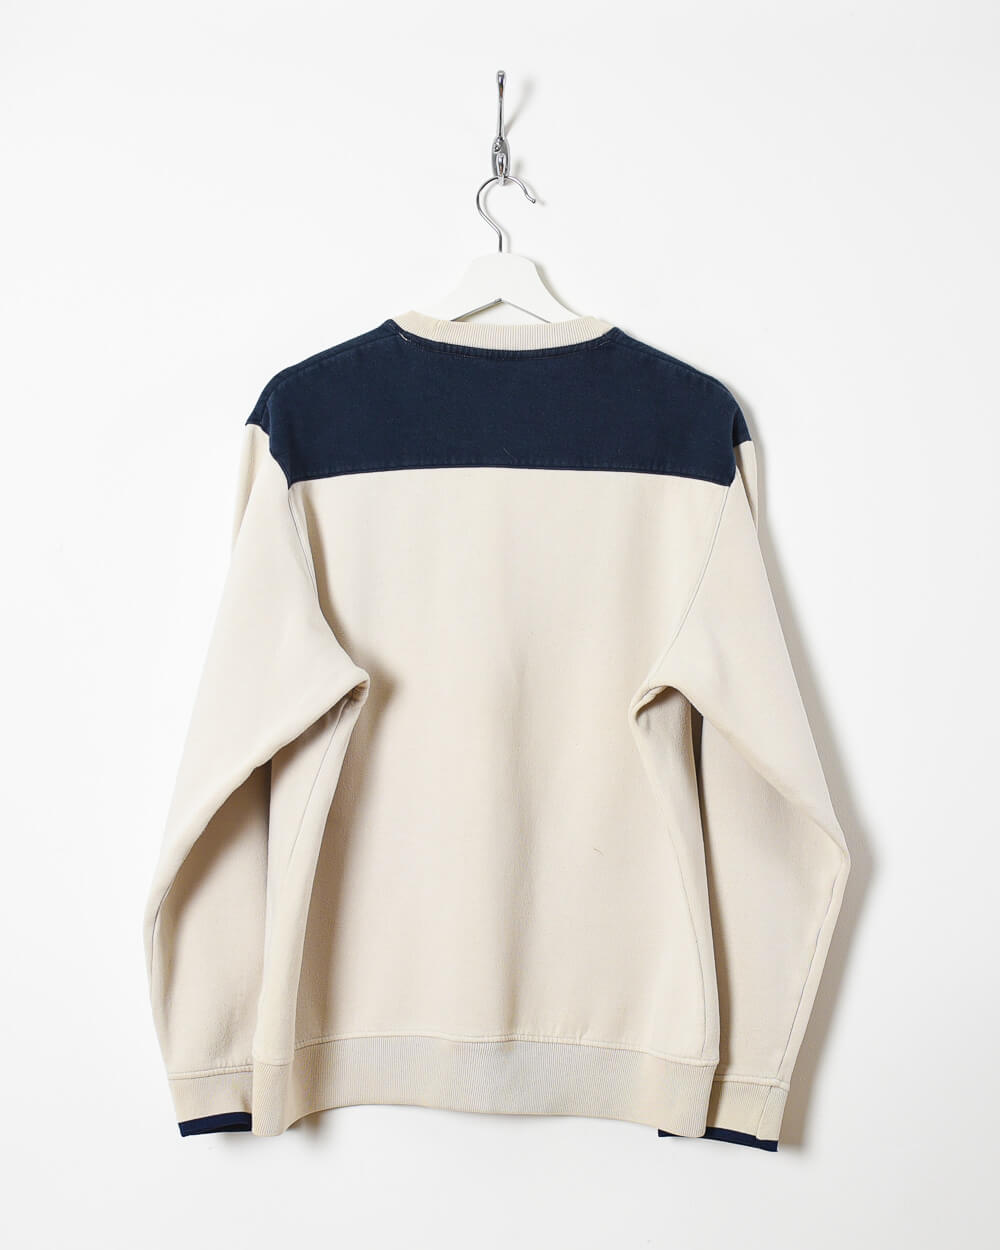 Neutral Adidas Sweatshirt - Medium